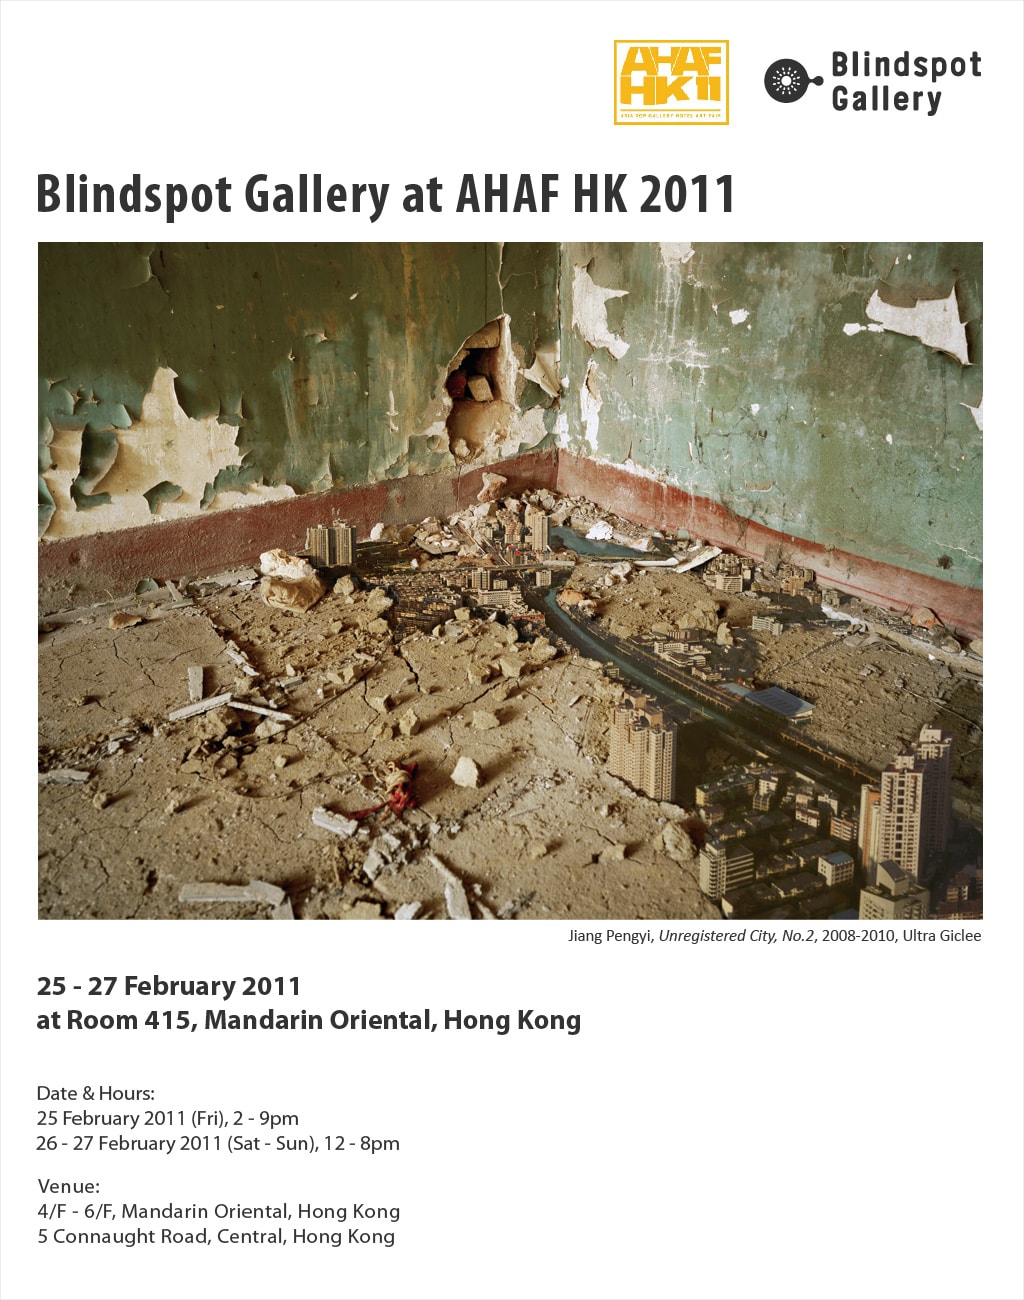 Blindspot Gallery at Asia Top Gallery Hotel Art Fair 2011